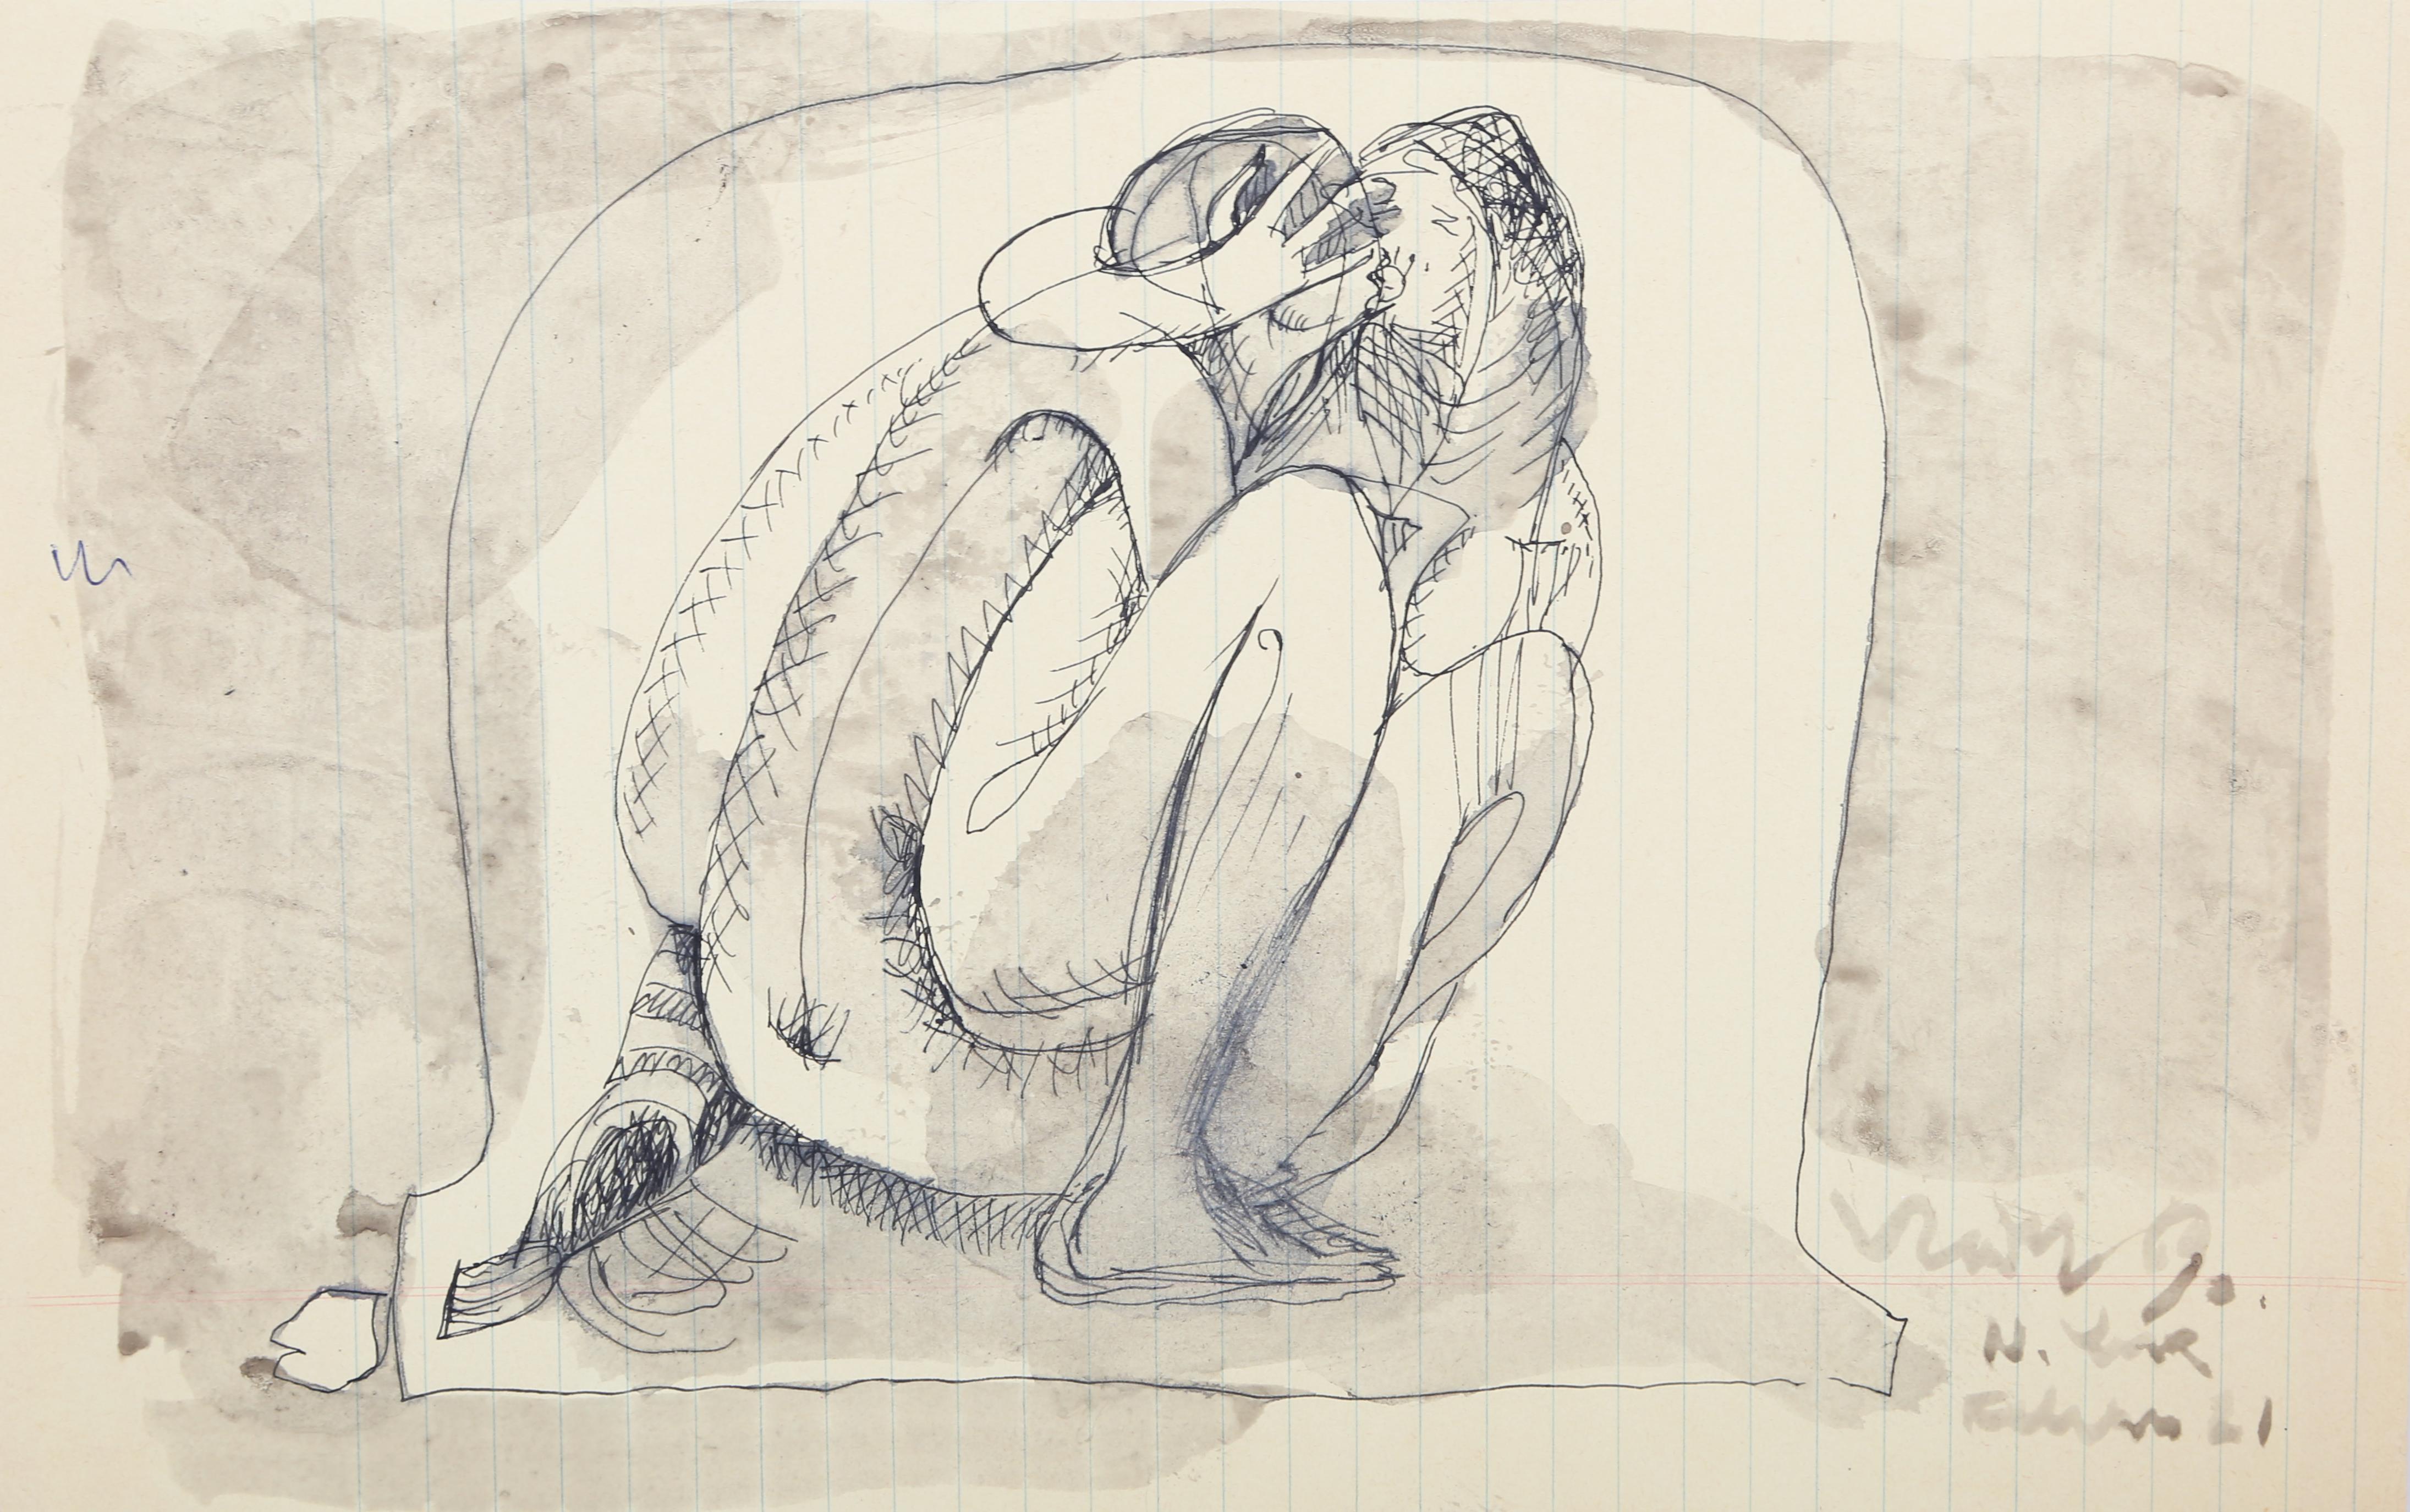 Vladimir Vlady Kibalchich Nude - Lovers, Ink Drawing on Paper by Vladimir "Vlady" Kibalchich